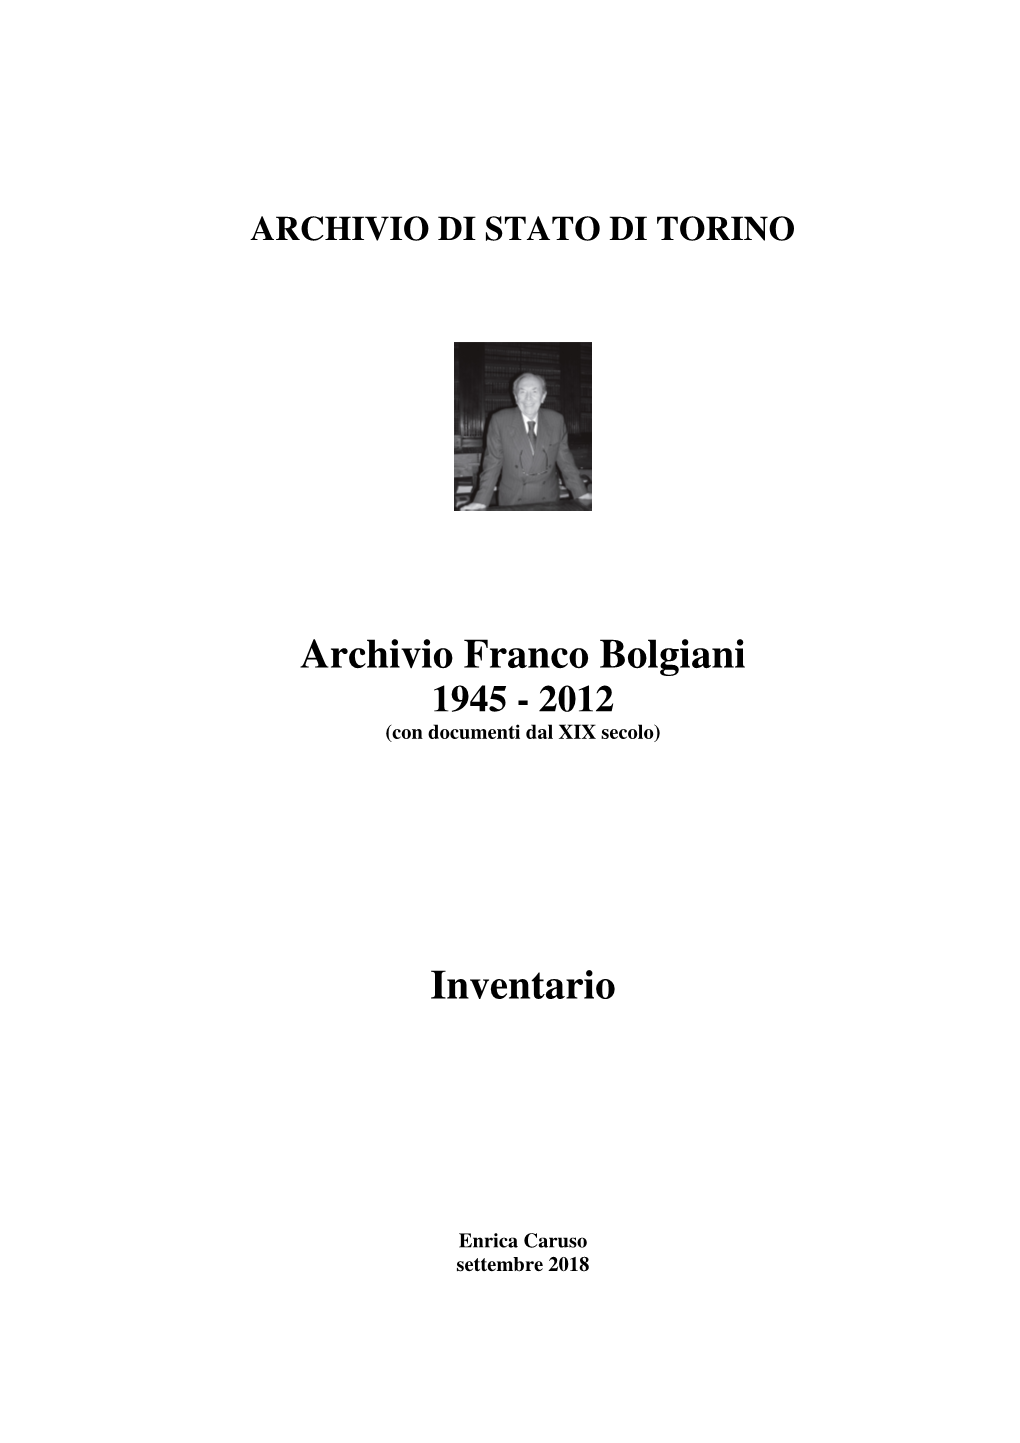 Archivio Franco Bolgiani Inventario